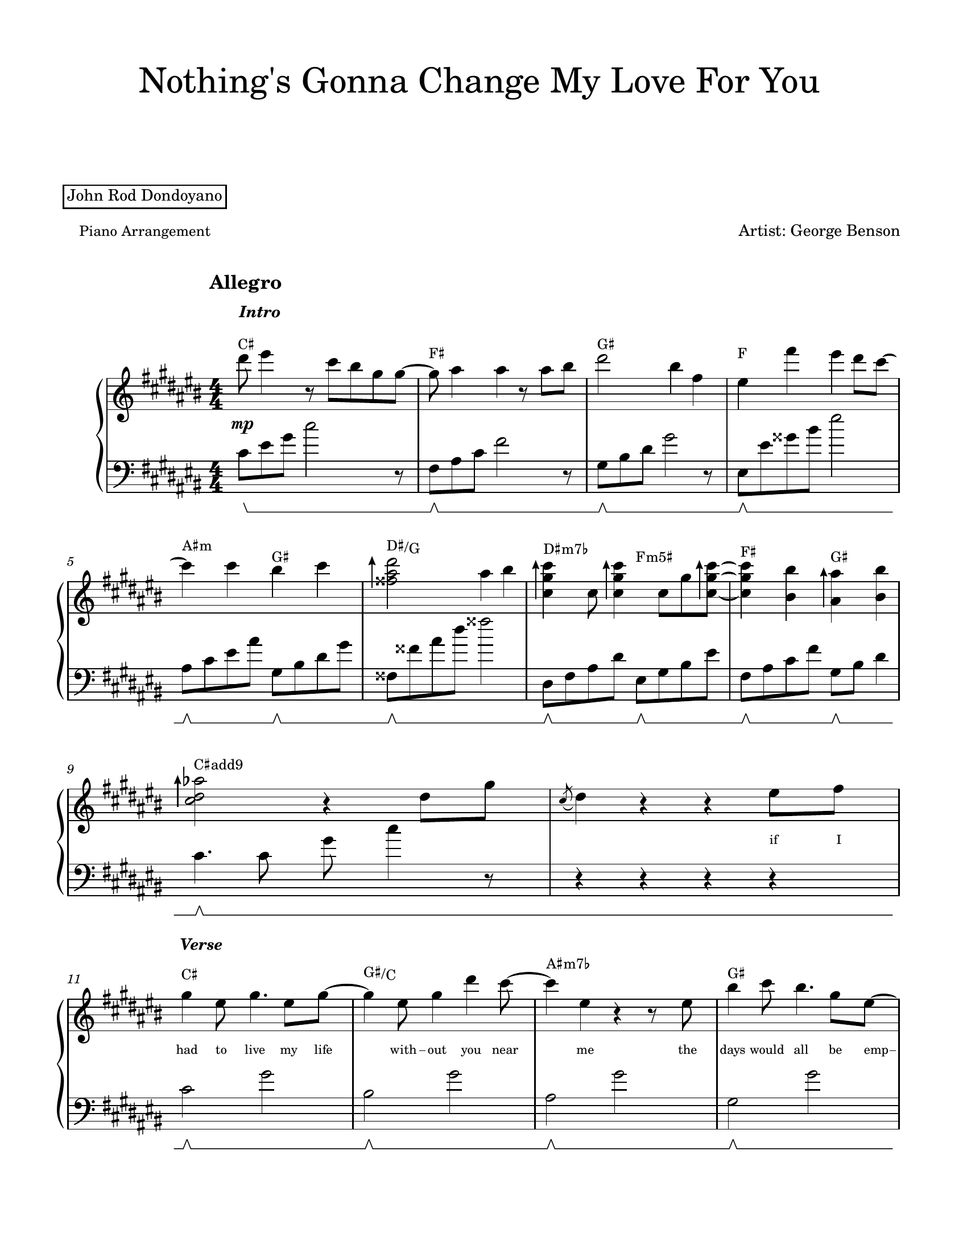 George Benson - Nothing's Gonna Change My Love For You (PIANO SHEET) by John Rod Dondoyano